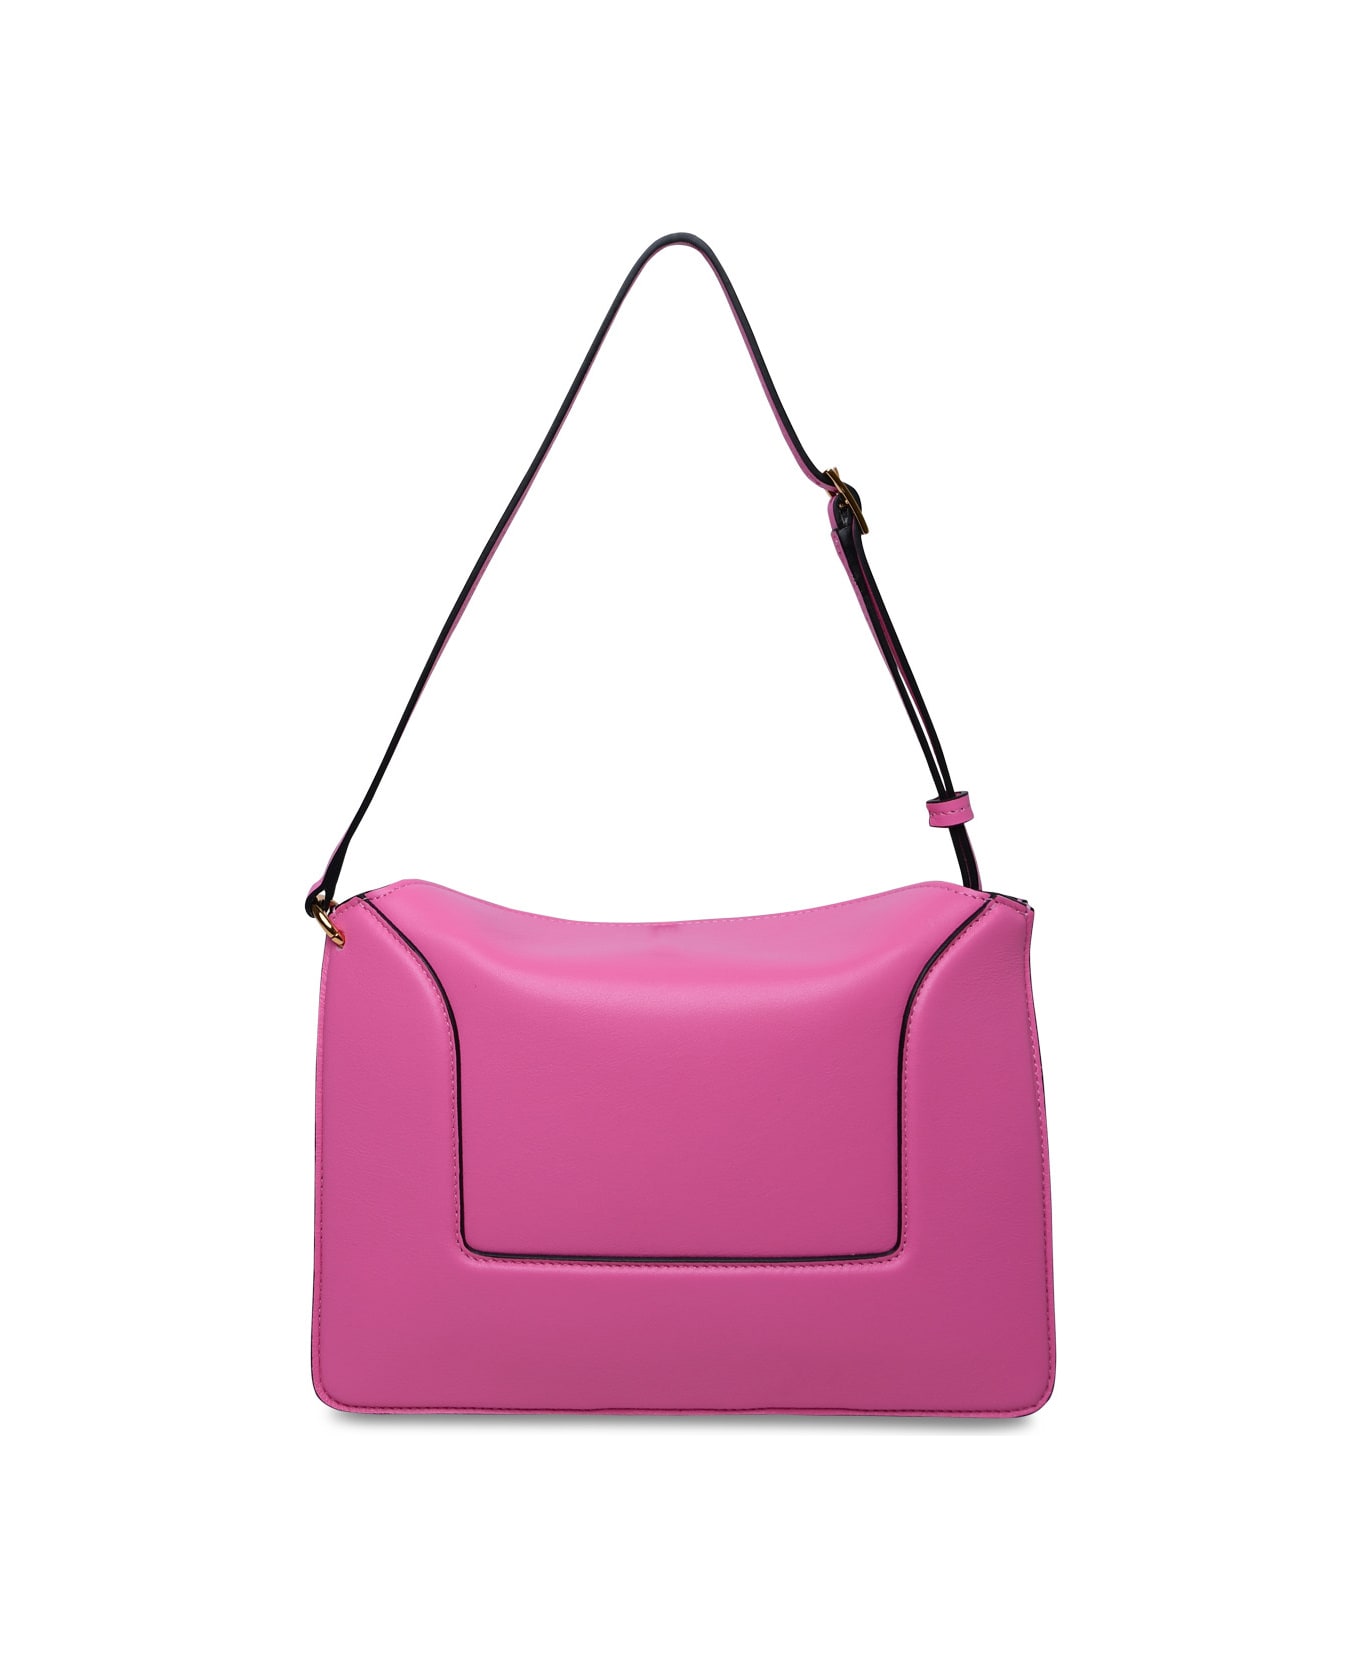 Wandler 'penelope' Pink Calf Leather Bag - Fuchsia